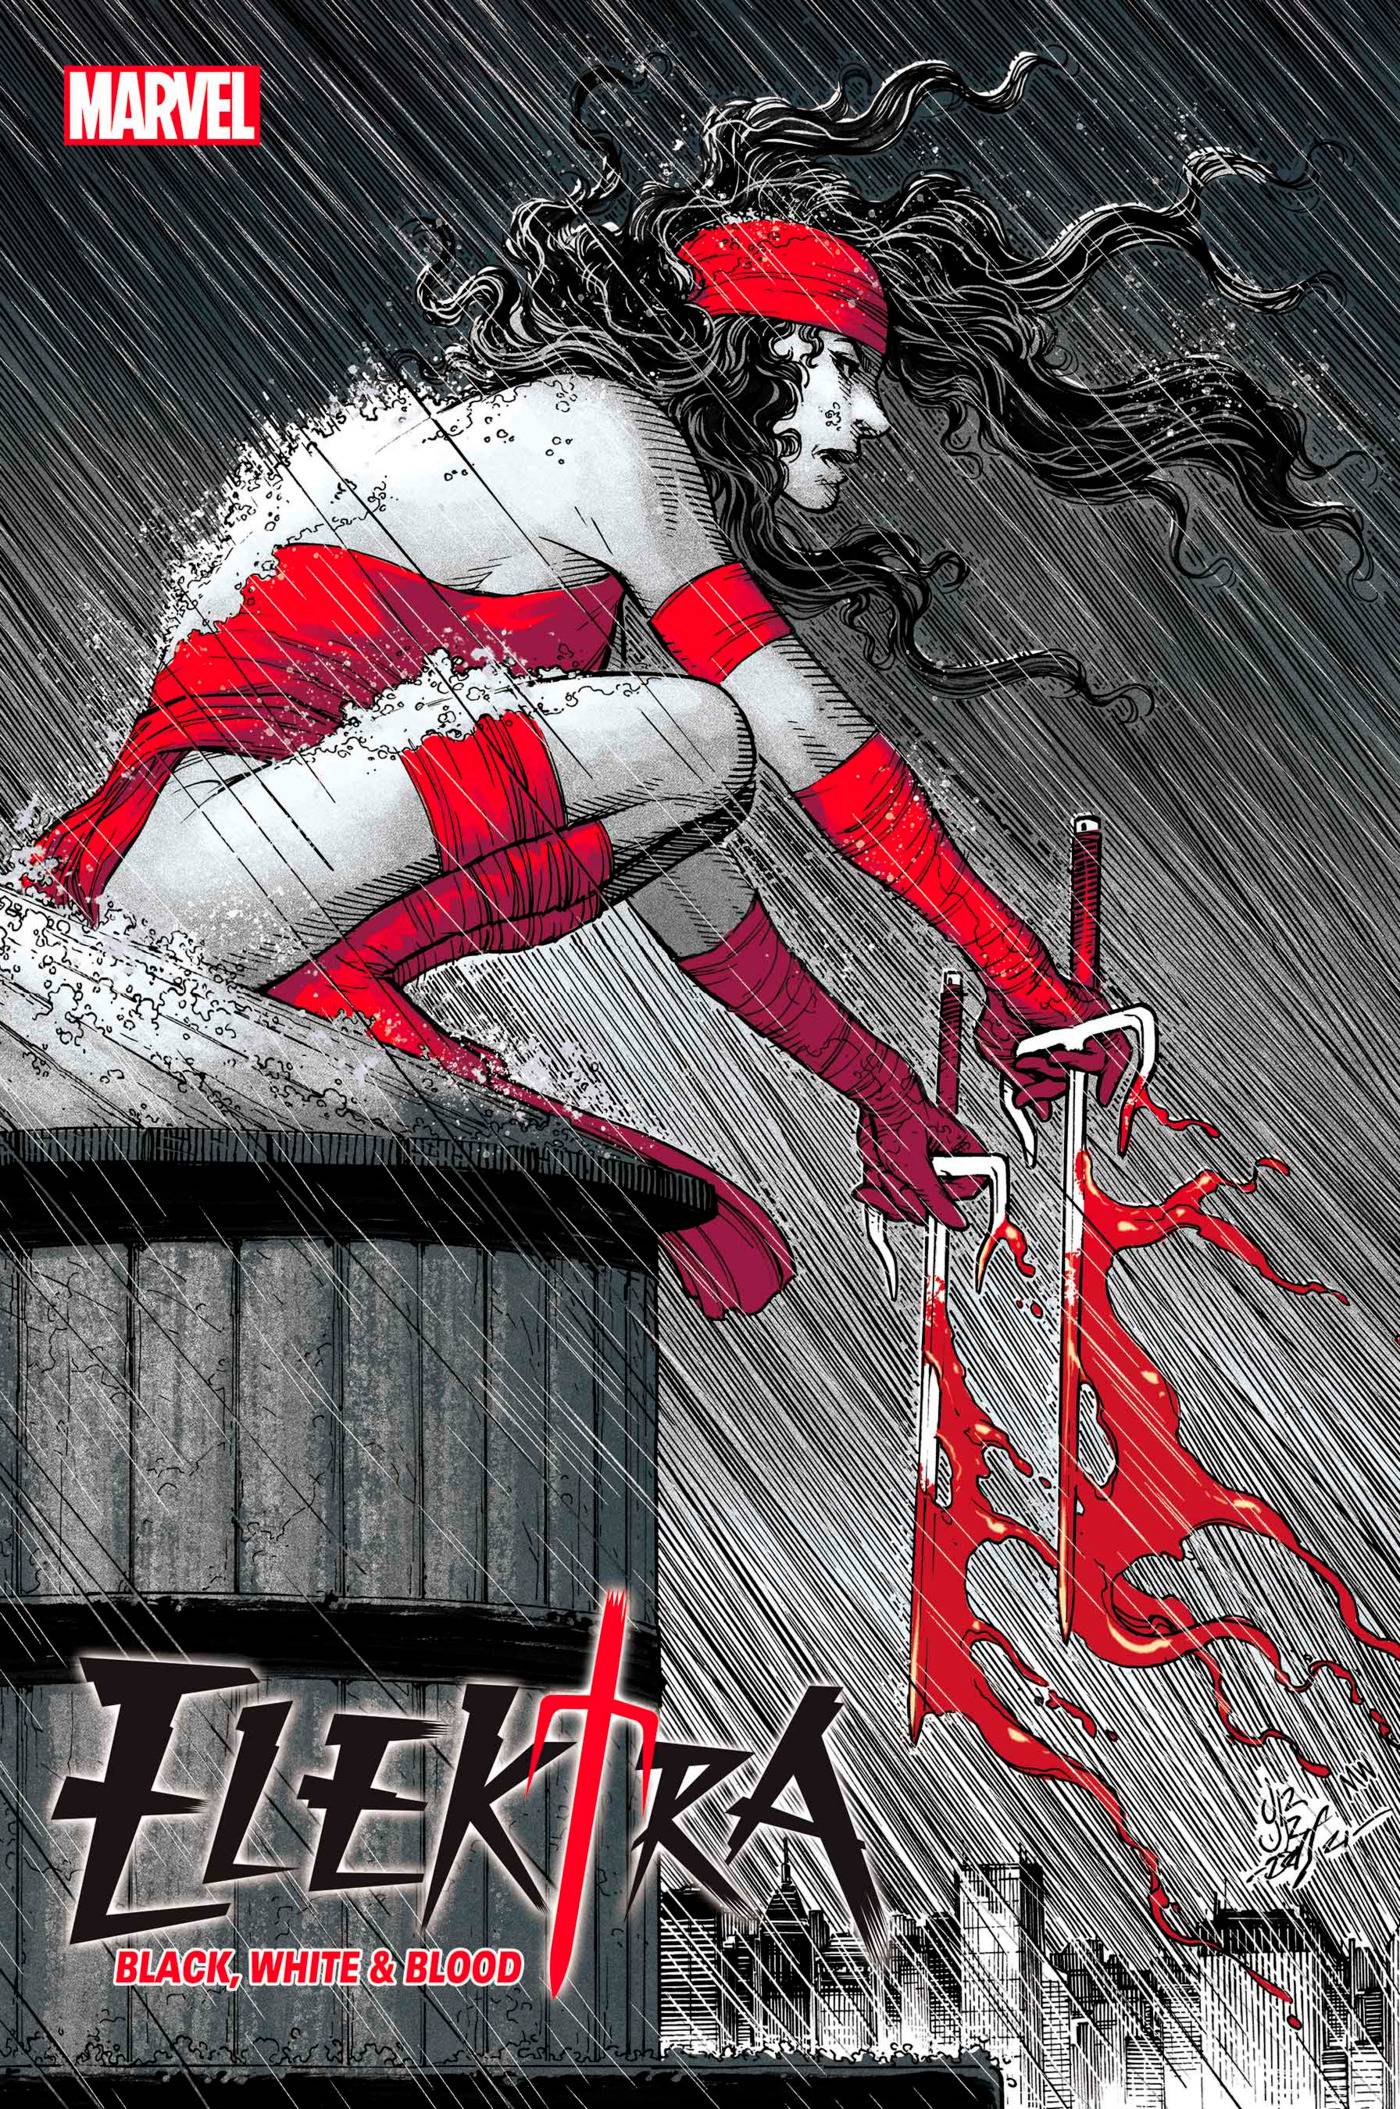 Comic Collection: Elektra Black, White & Blood #1 - #4